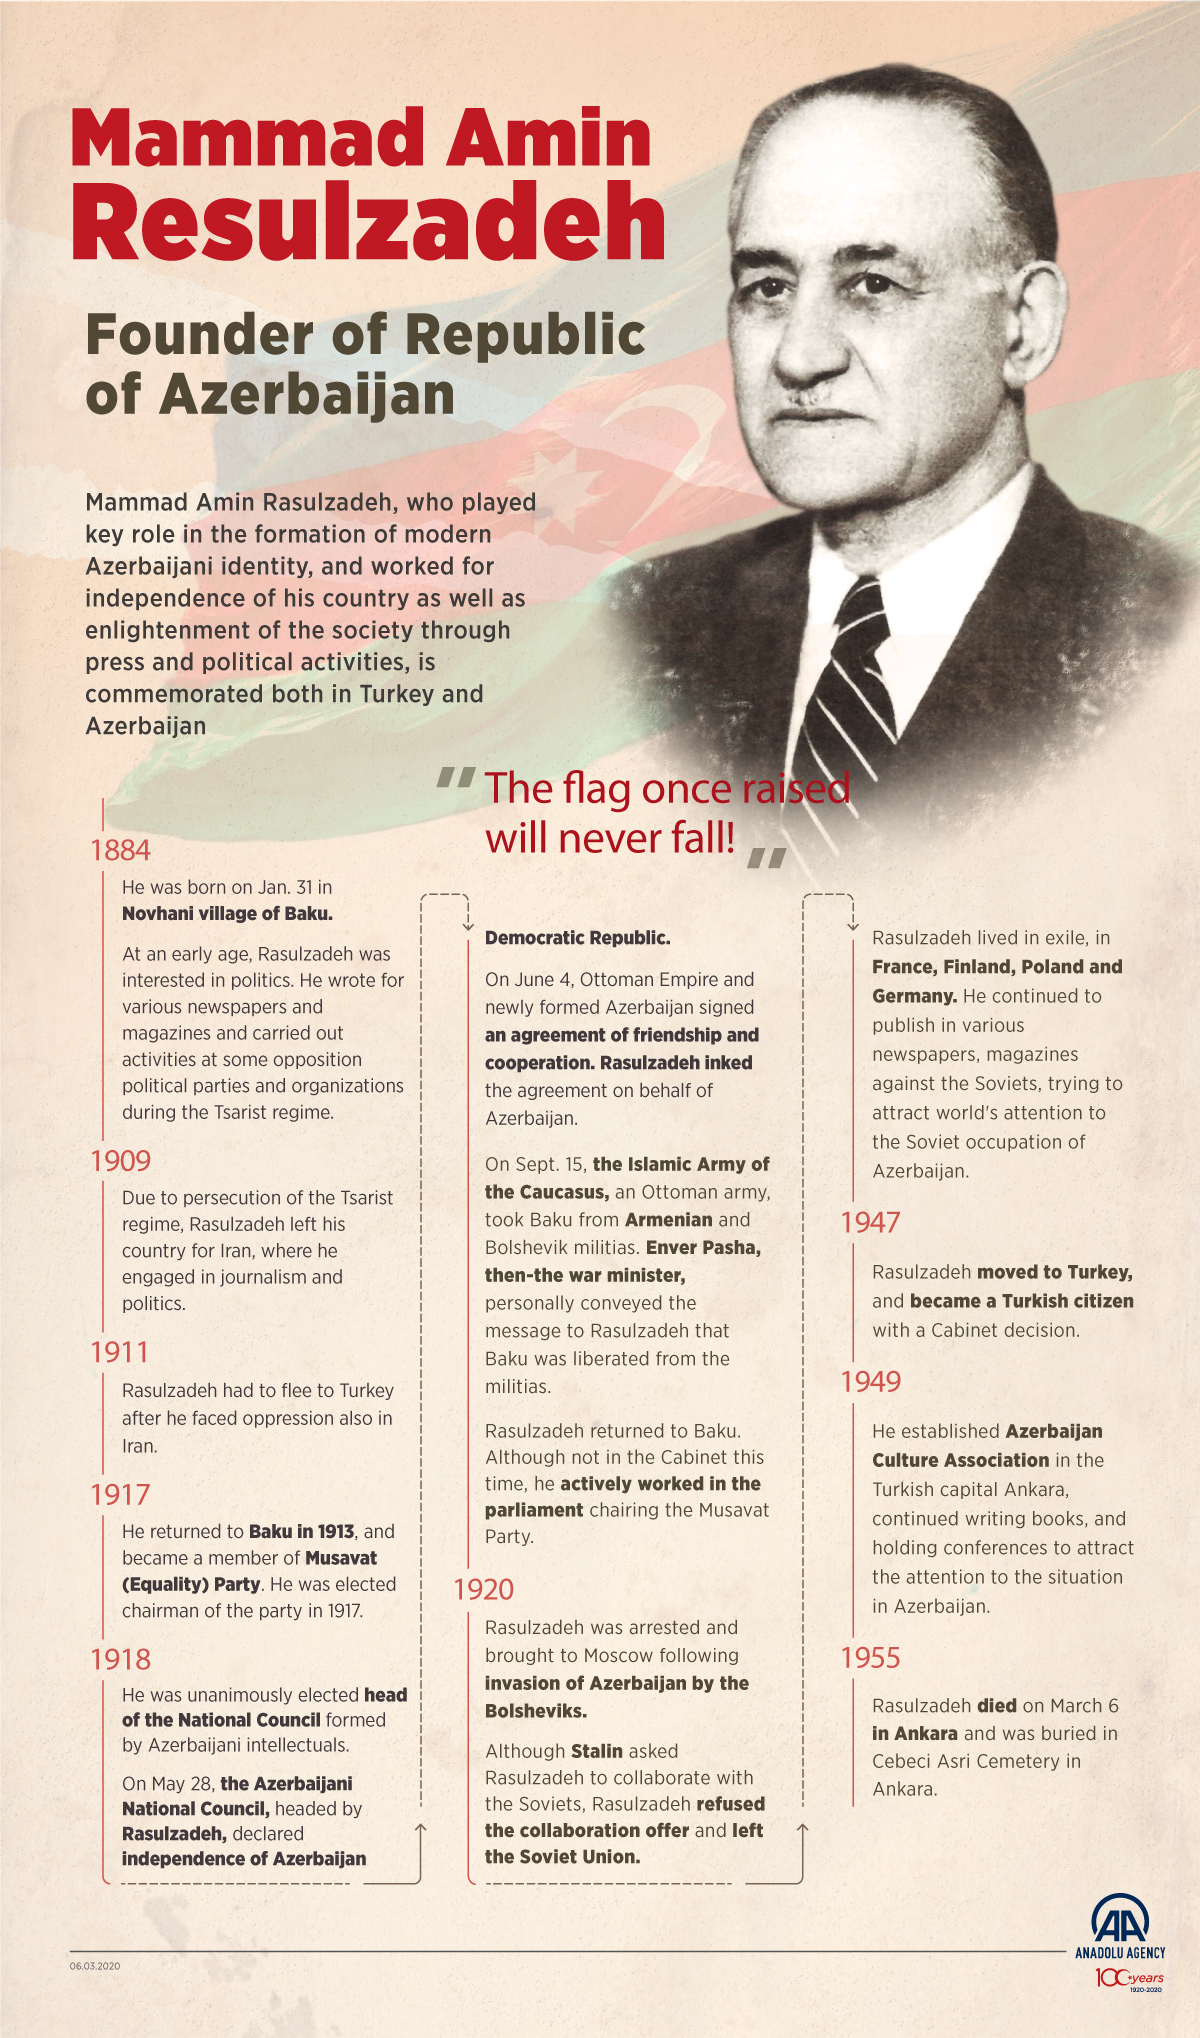 Mammad Amin Resulzadeh, founder of Republic of Azerbaijan